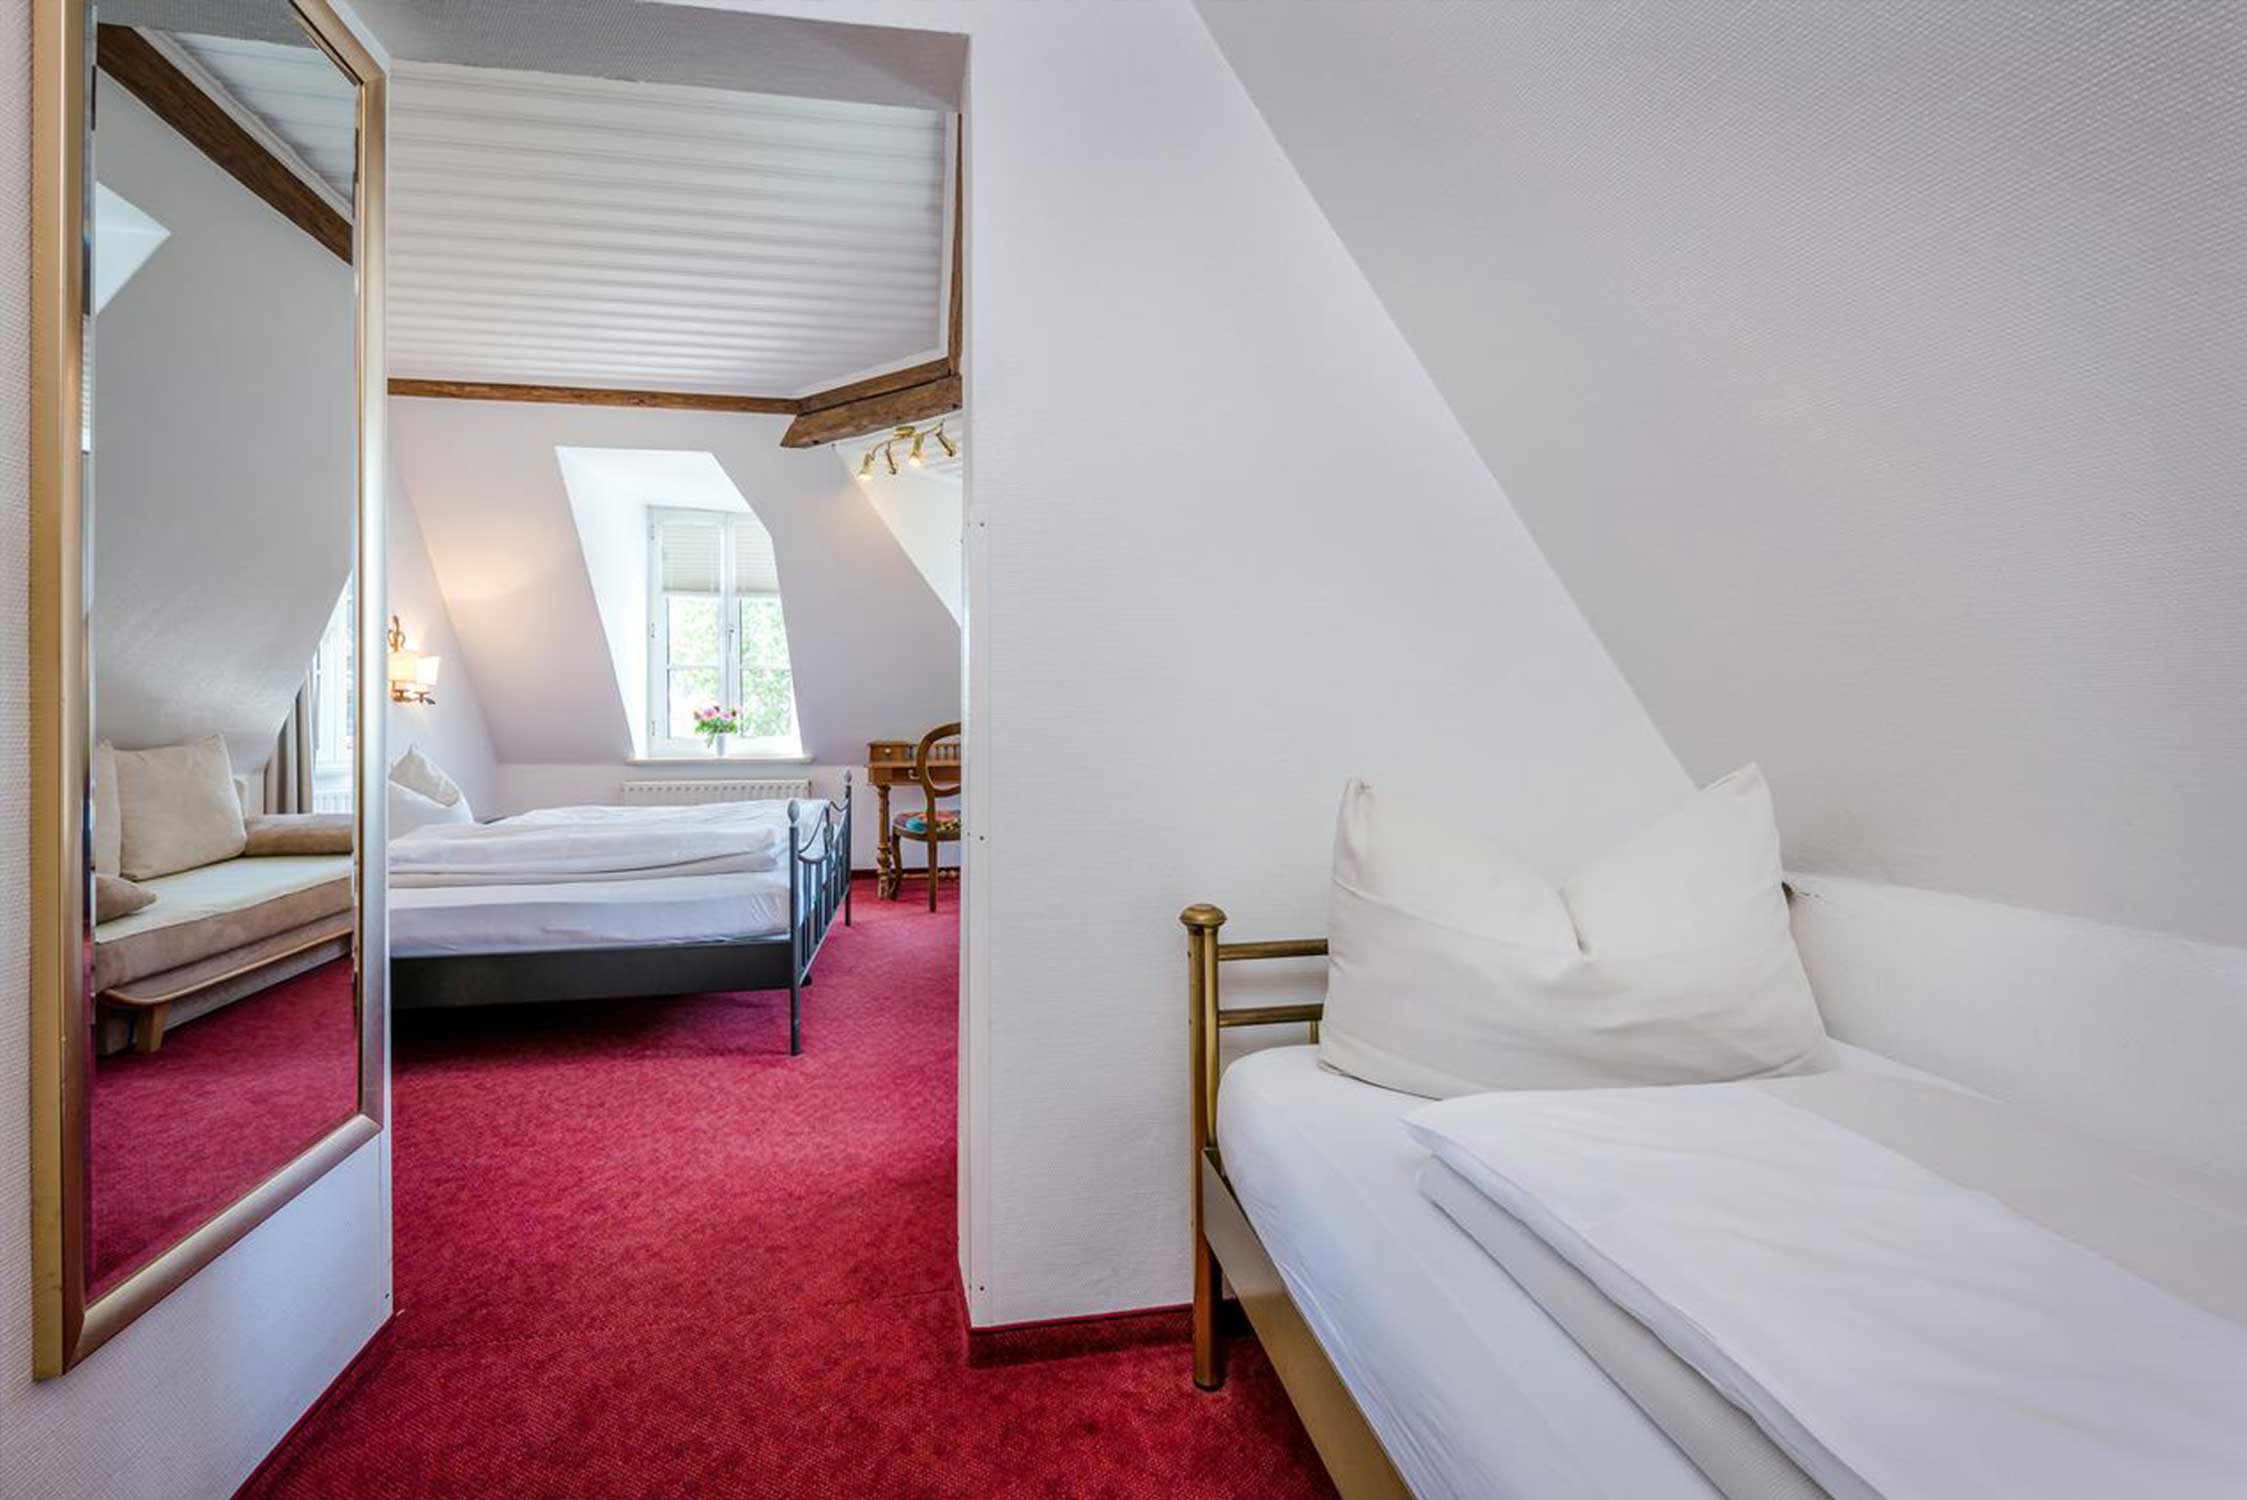 Hotel Laimer Hof, 3 bed room / family room view